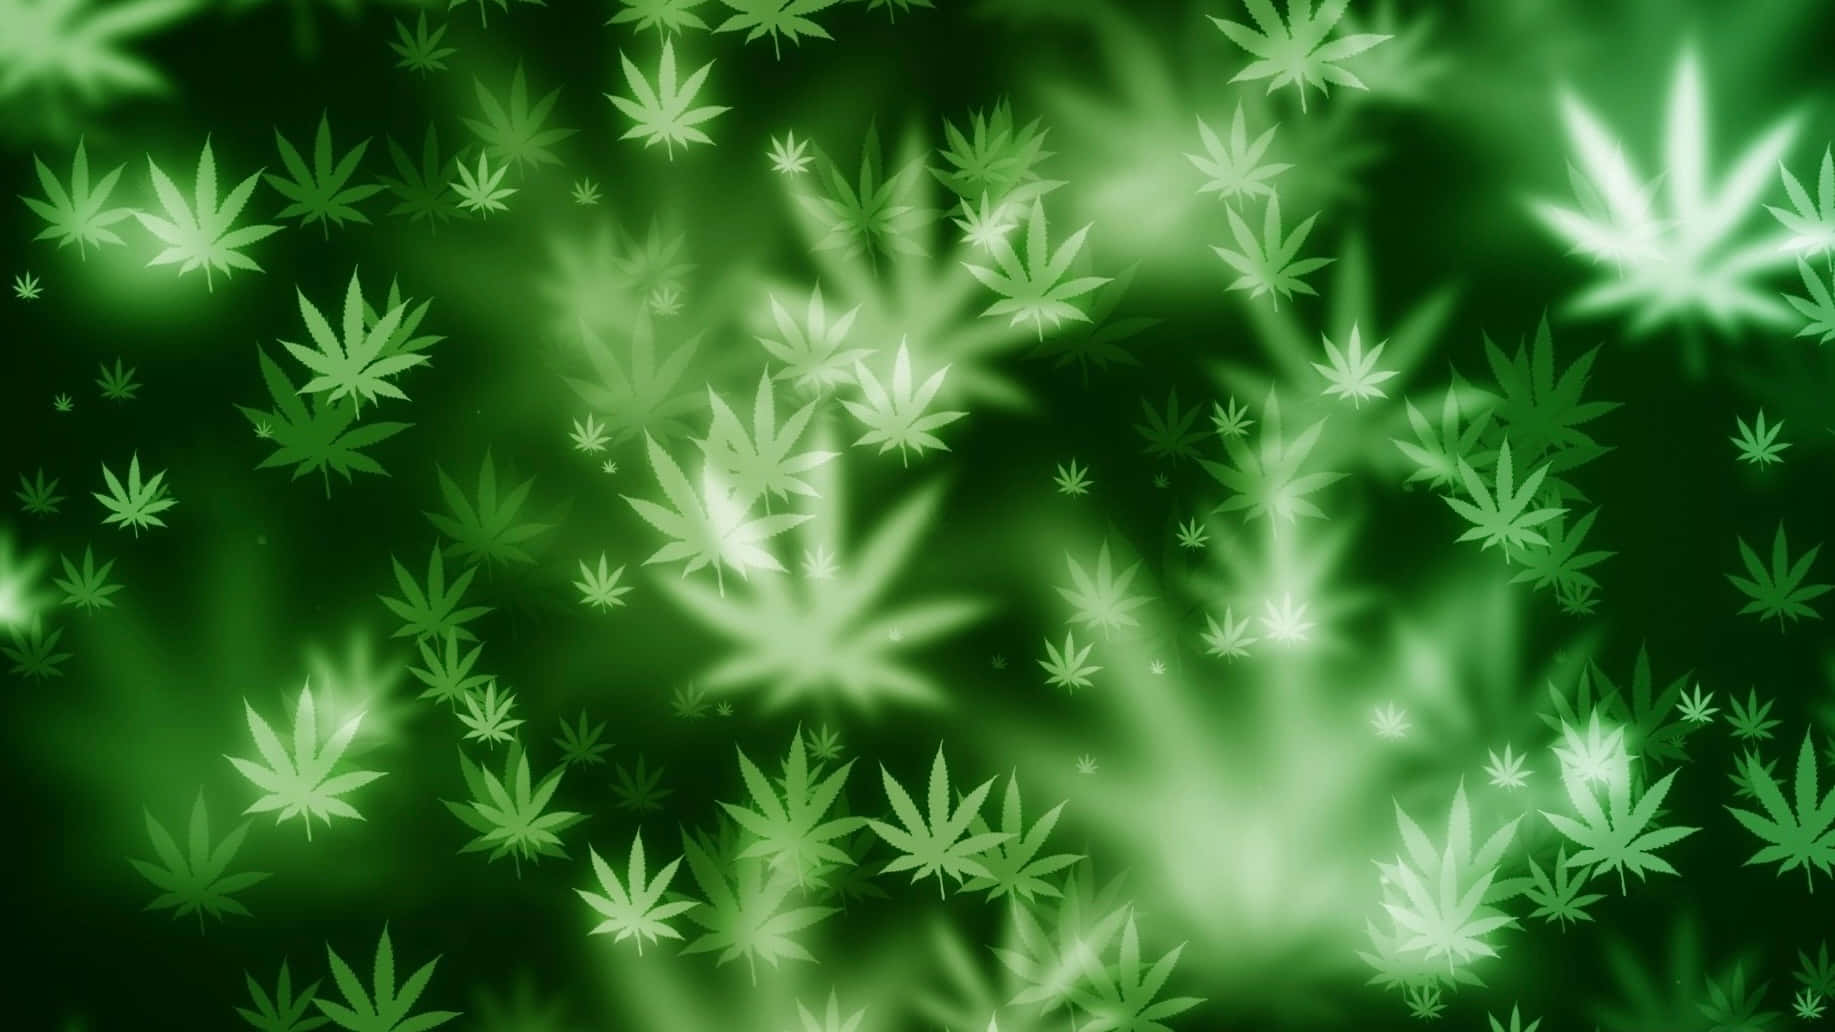 Atfylde Skærmen Med Sødt-duftende Cannabisblus.